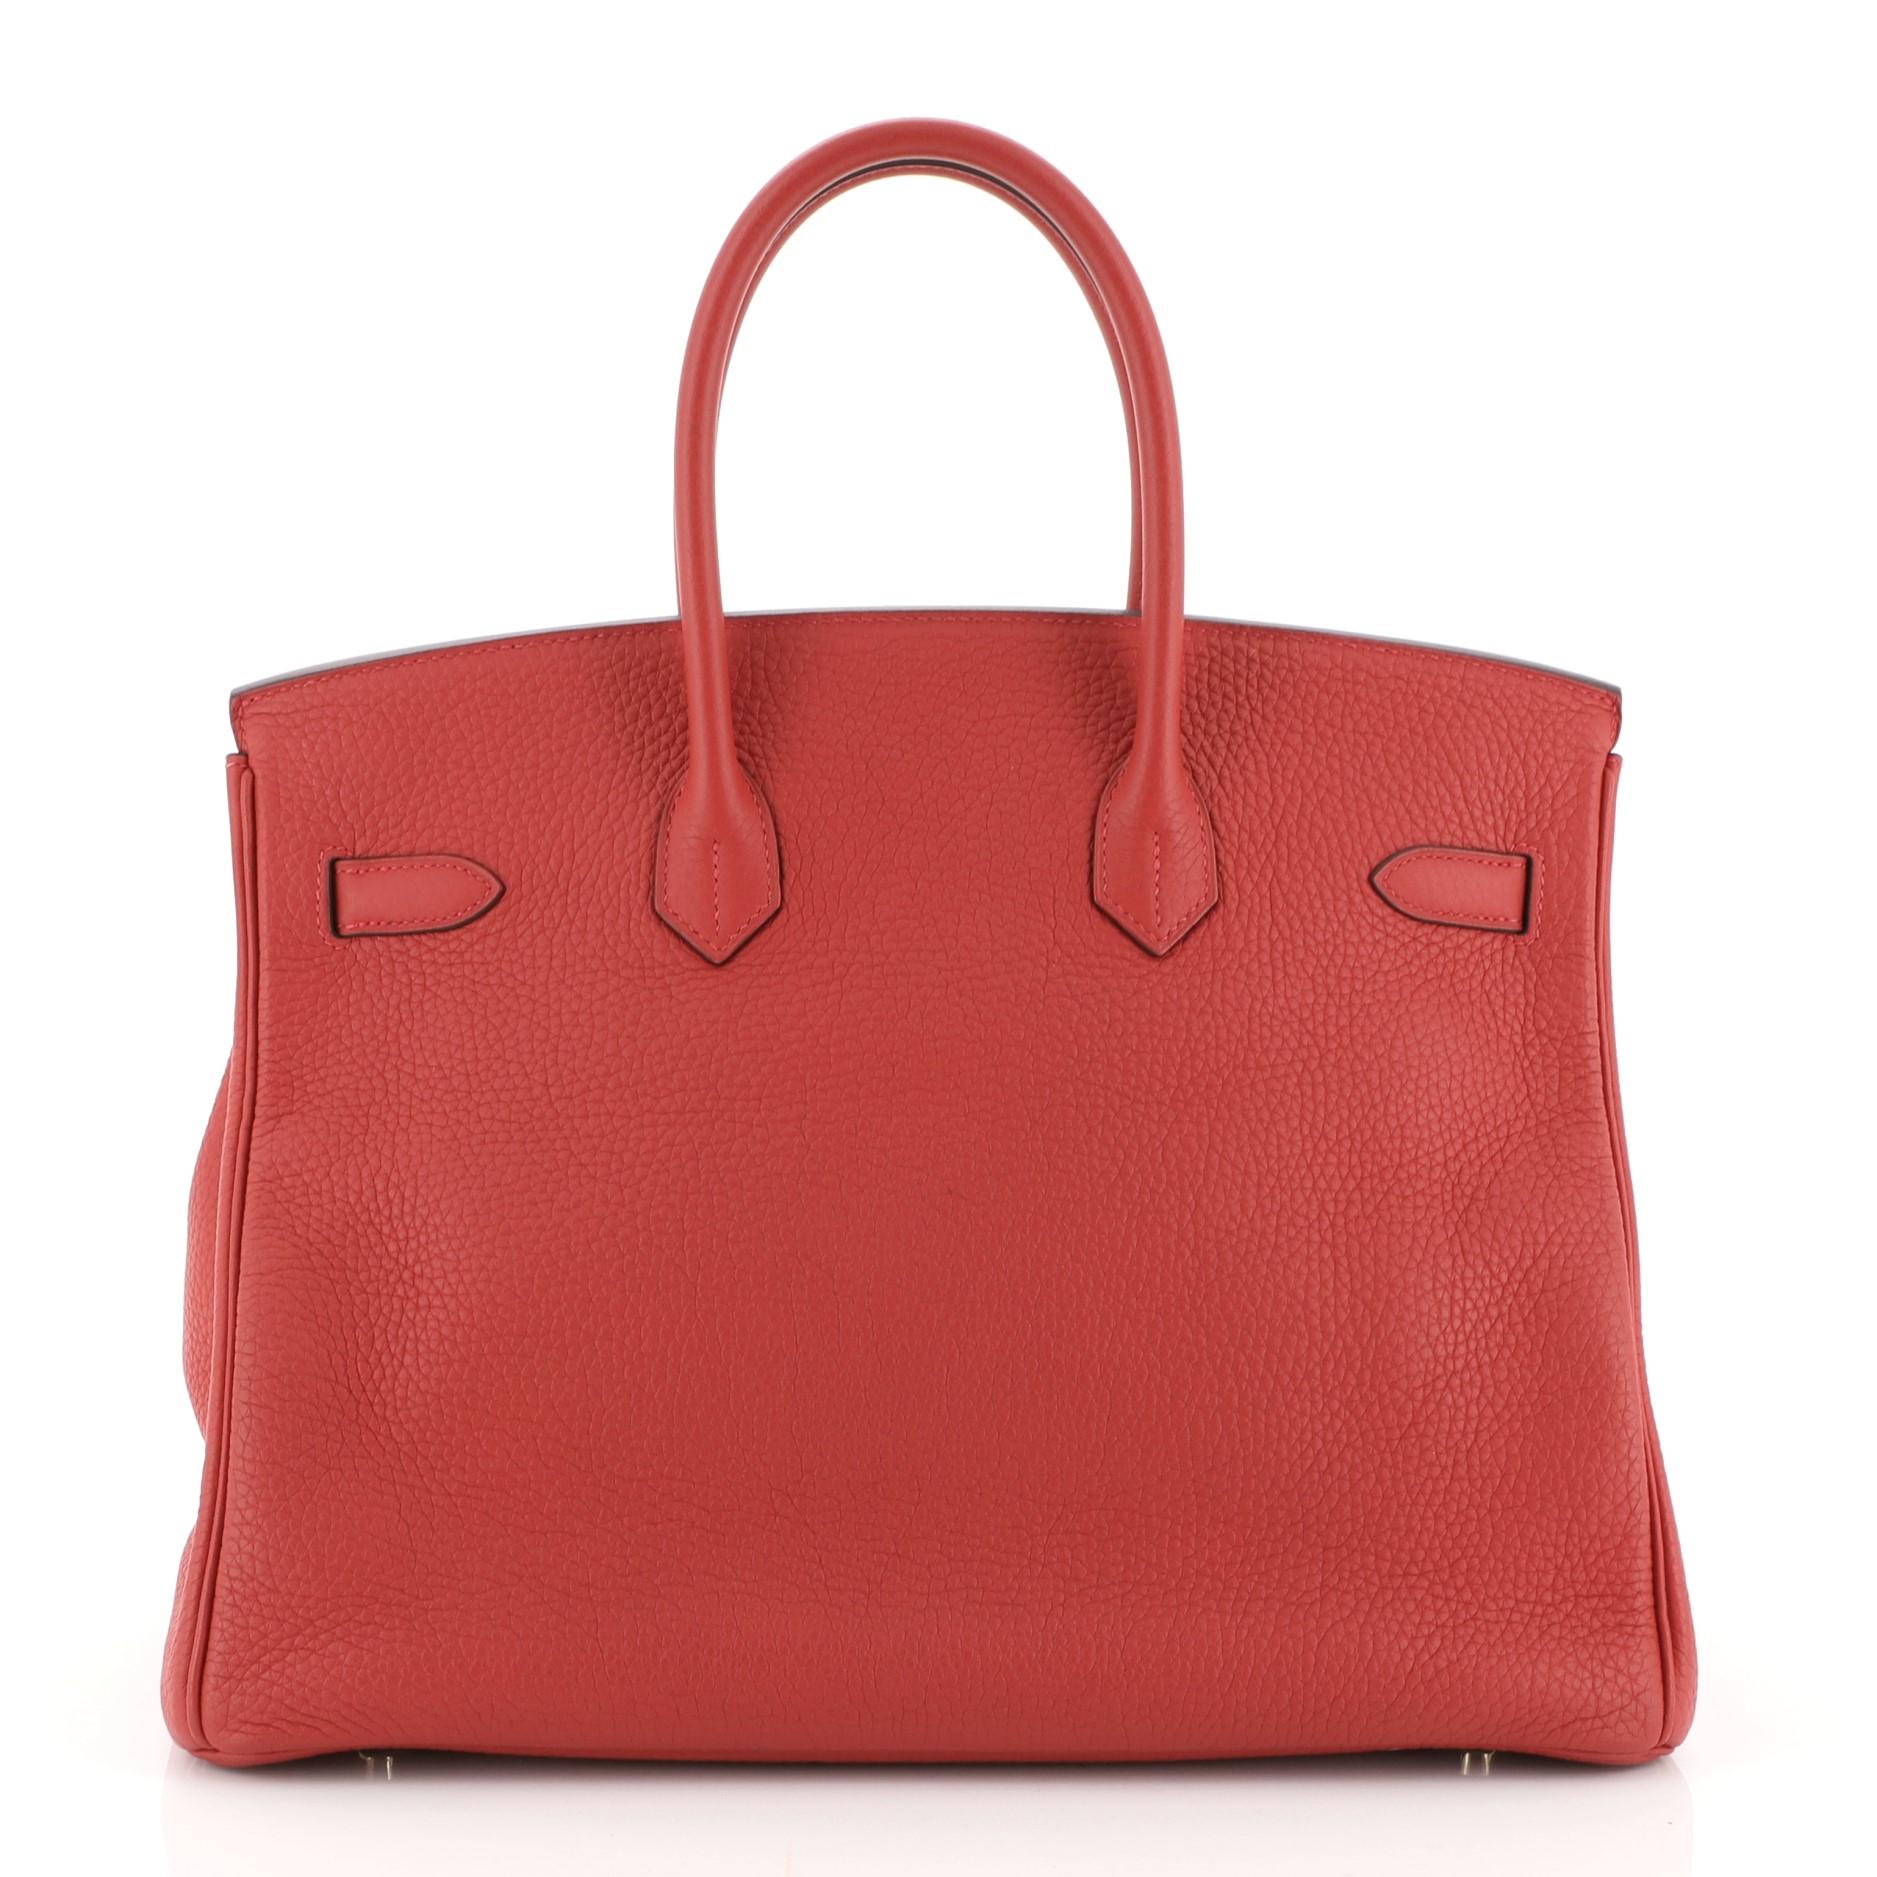 Red Hermes Birkin Handbag Rouge Vif Clemence with Gold Hardware 35